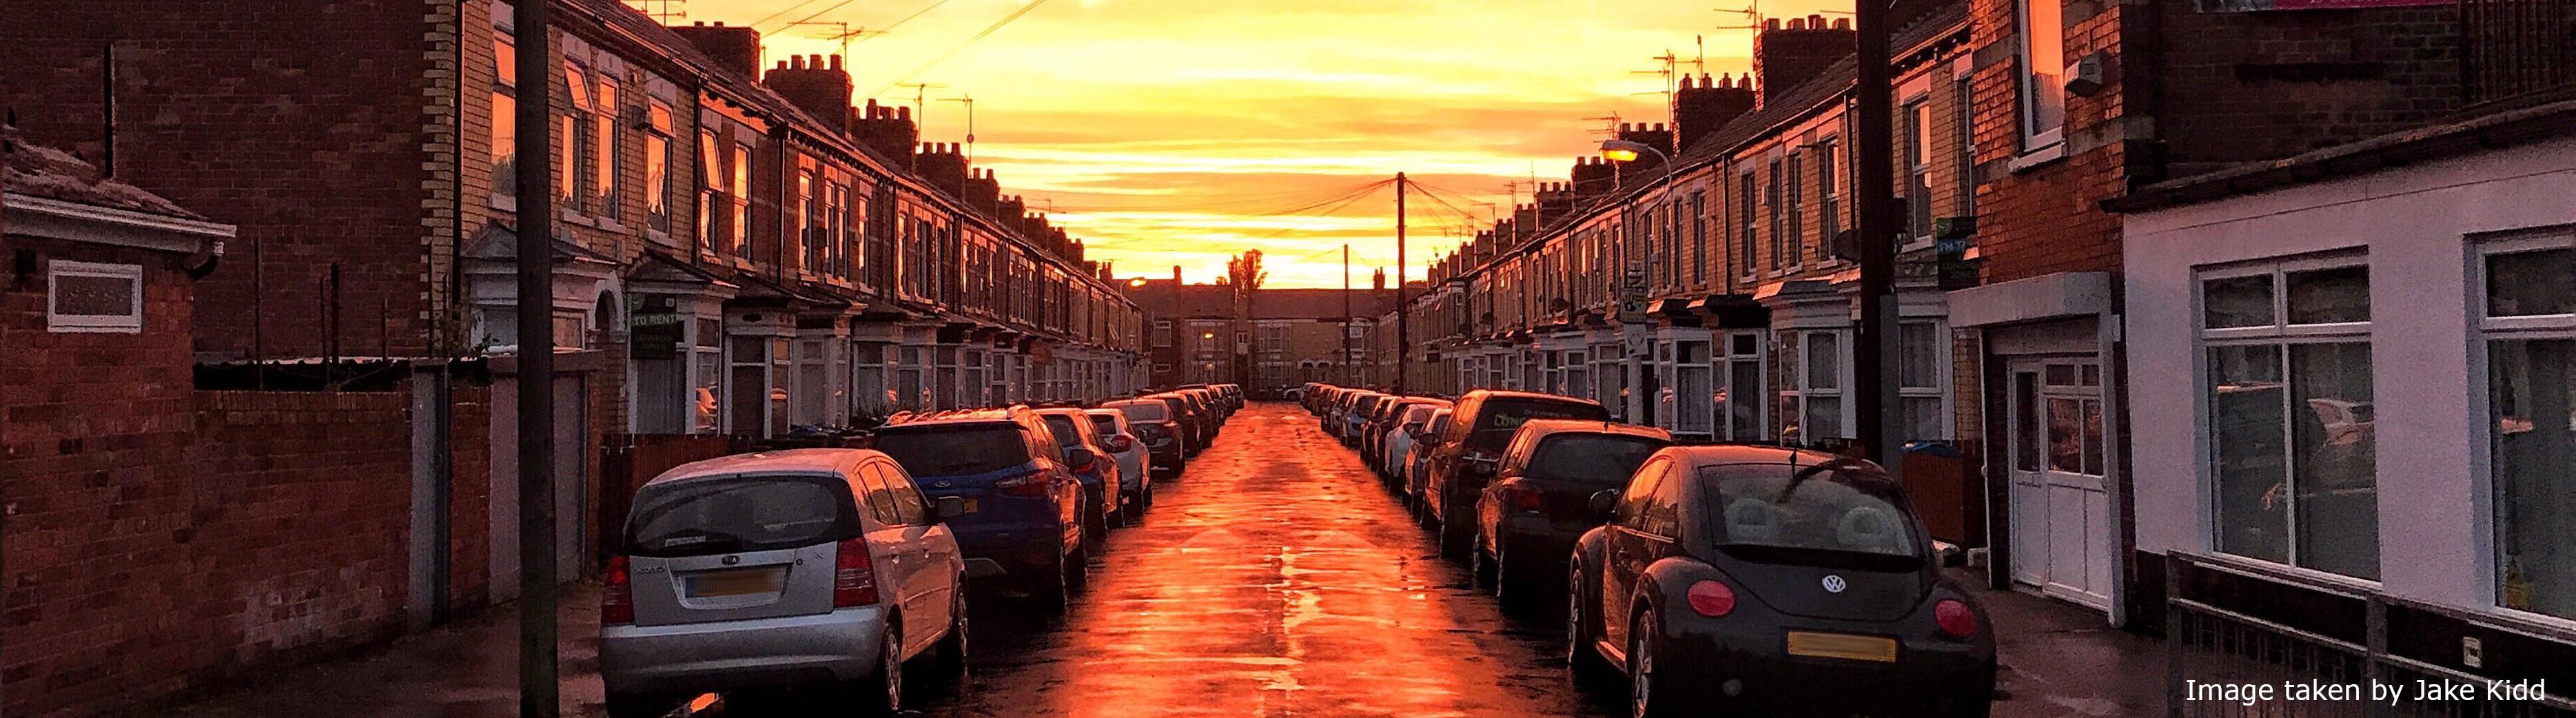 Photograph of Hull street at sun set taken by Jake Kidd